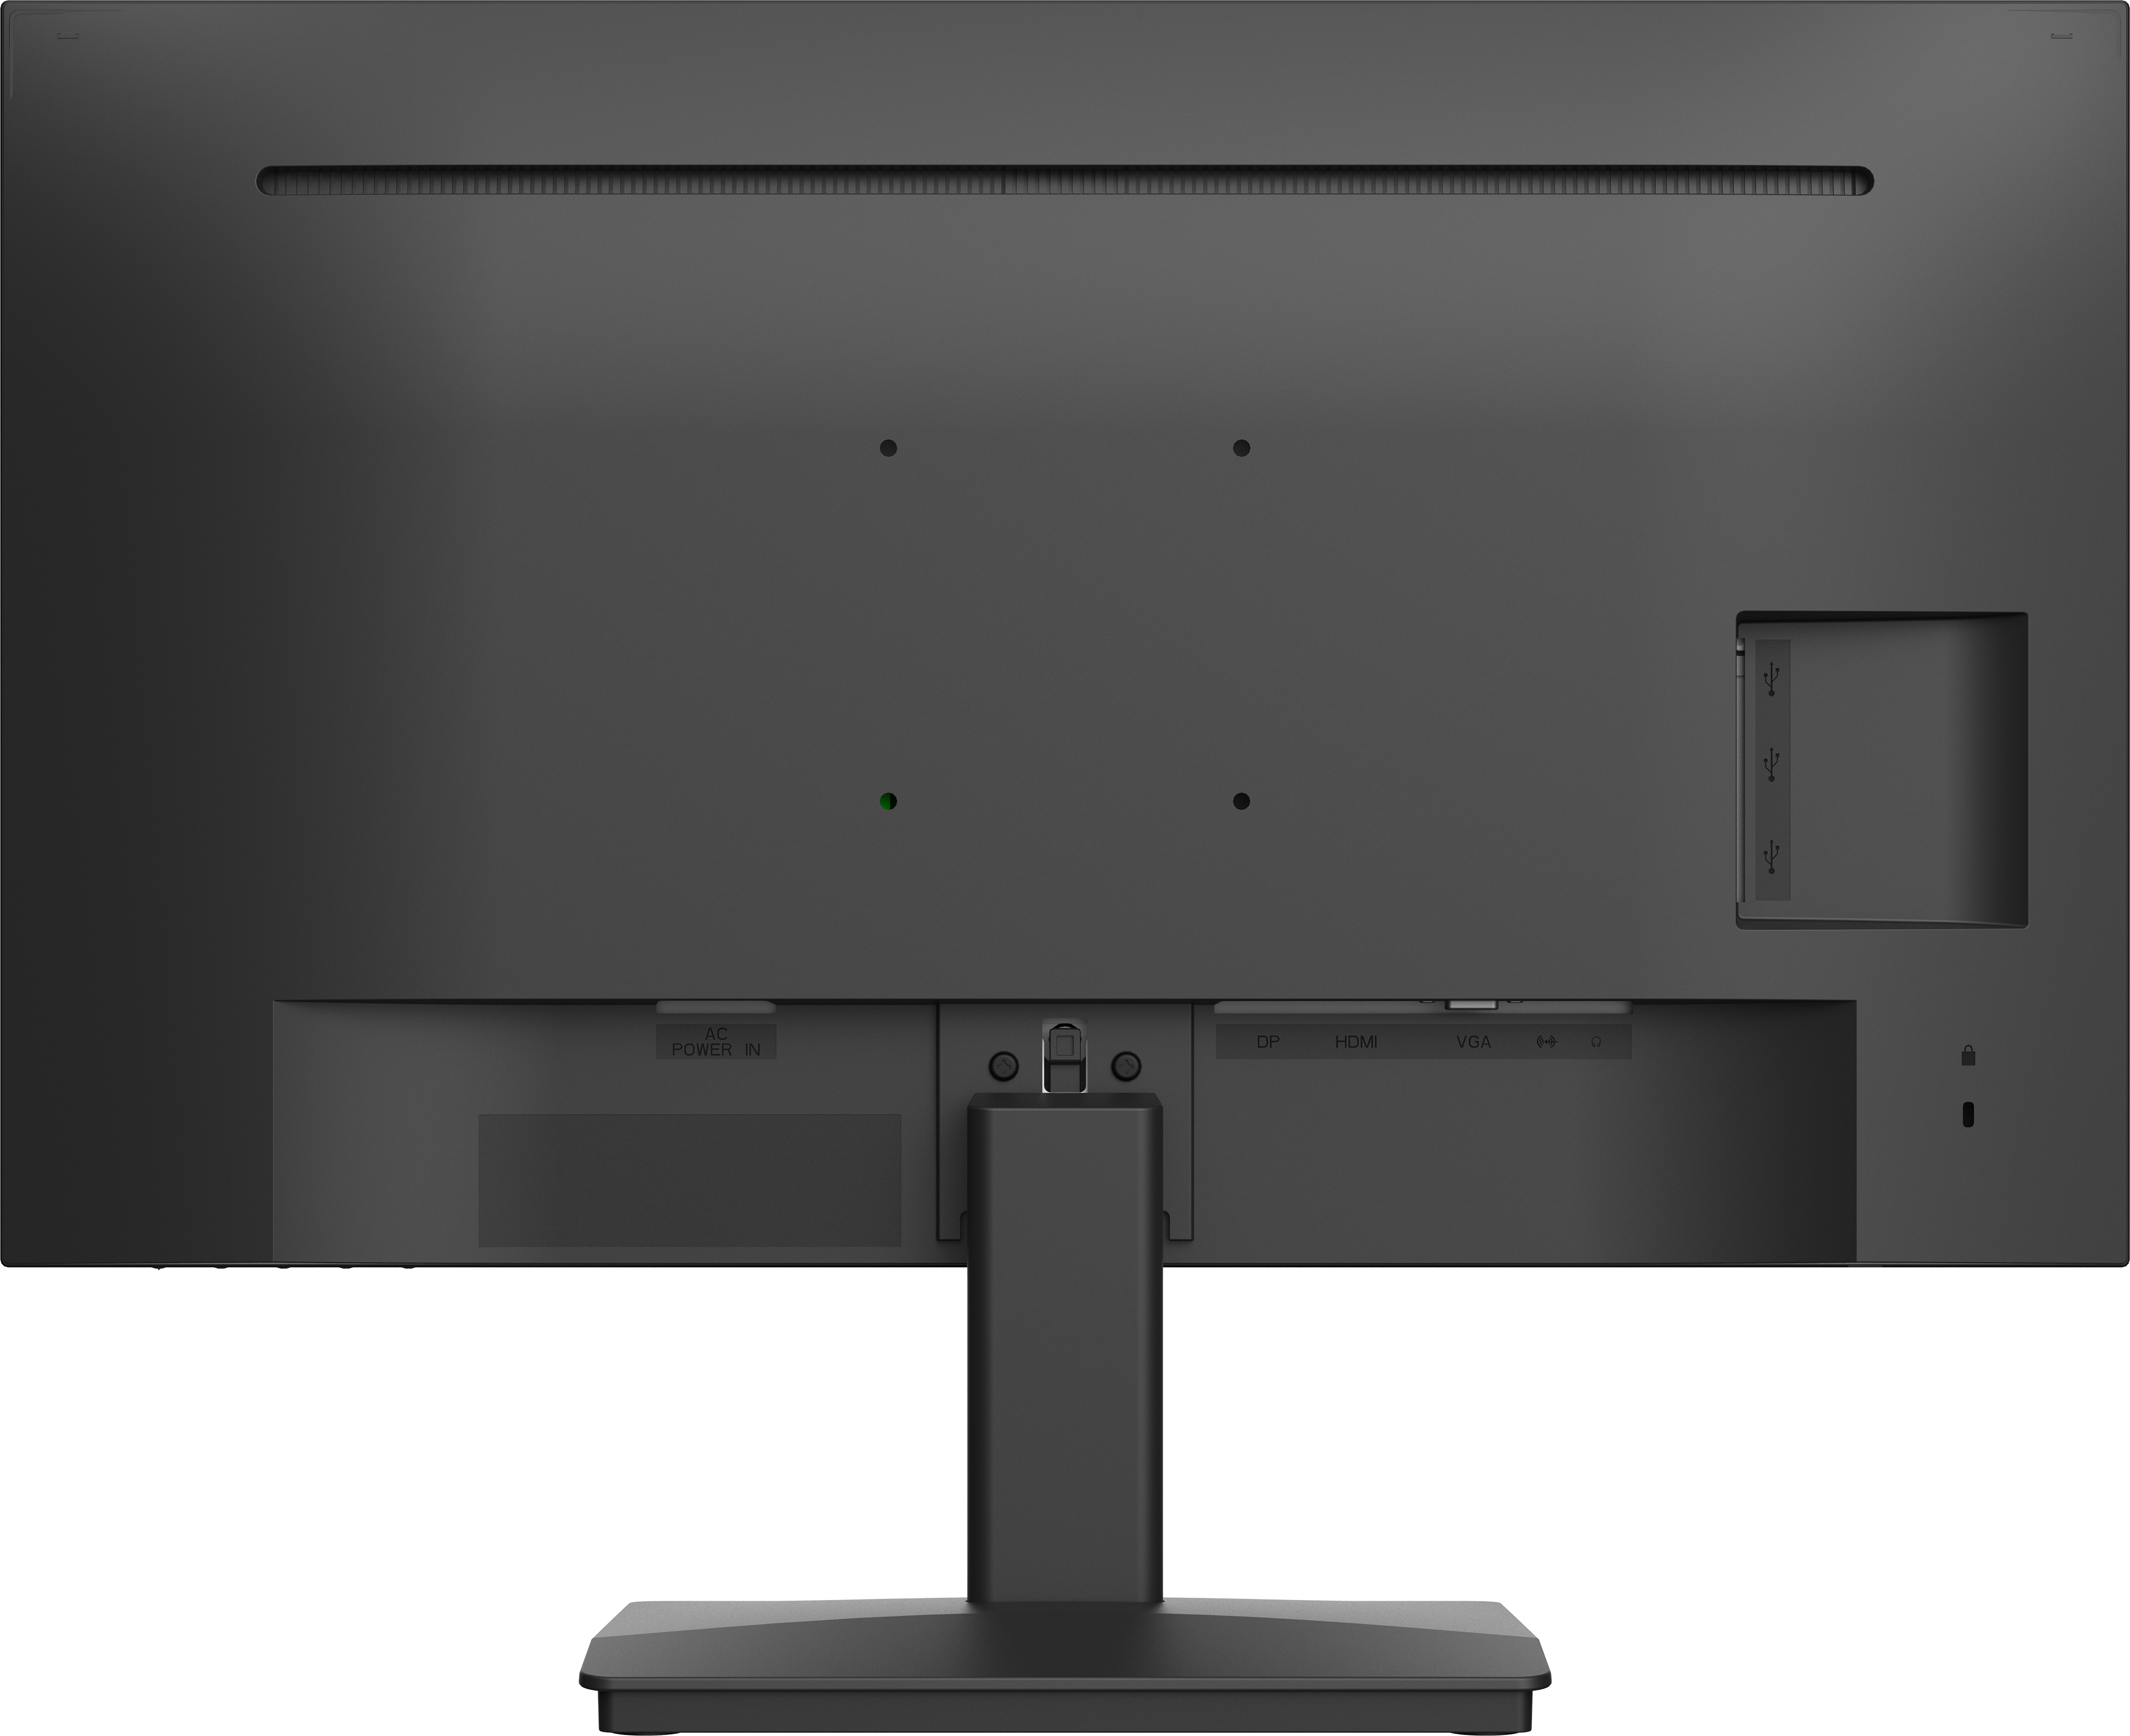 Iiyama ProLite XU2793HS-B4 | 27" (68,5cm) | dreiseitig rahmenlosen Design für Multi-Monitor-Setups